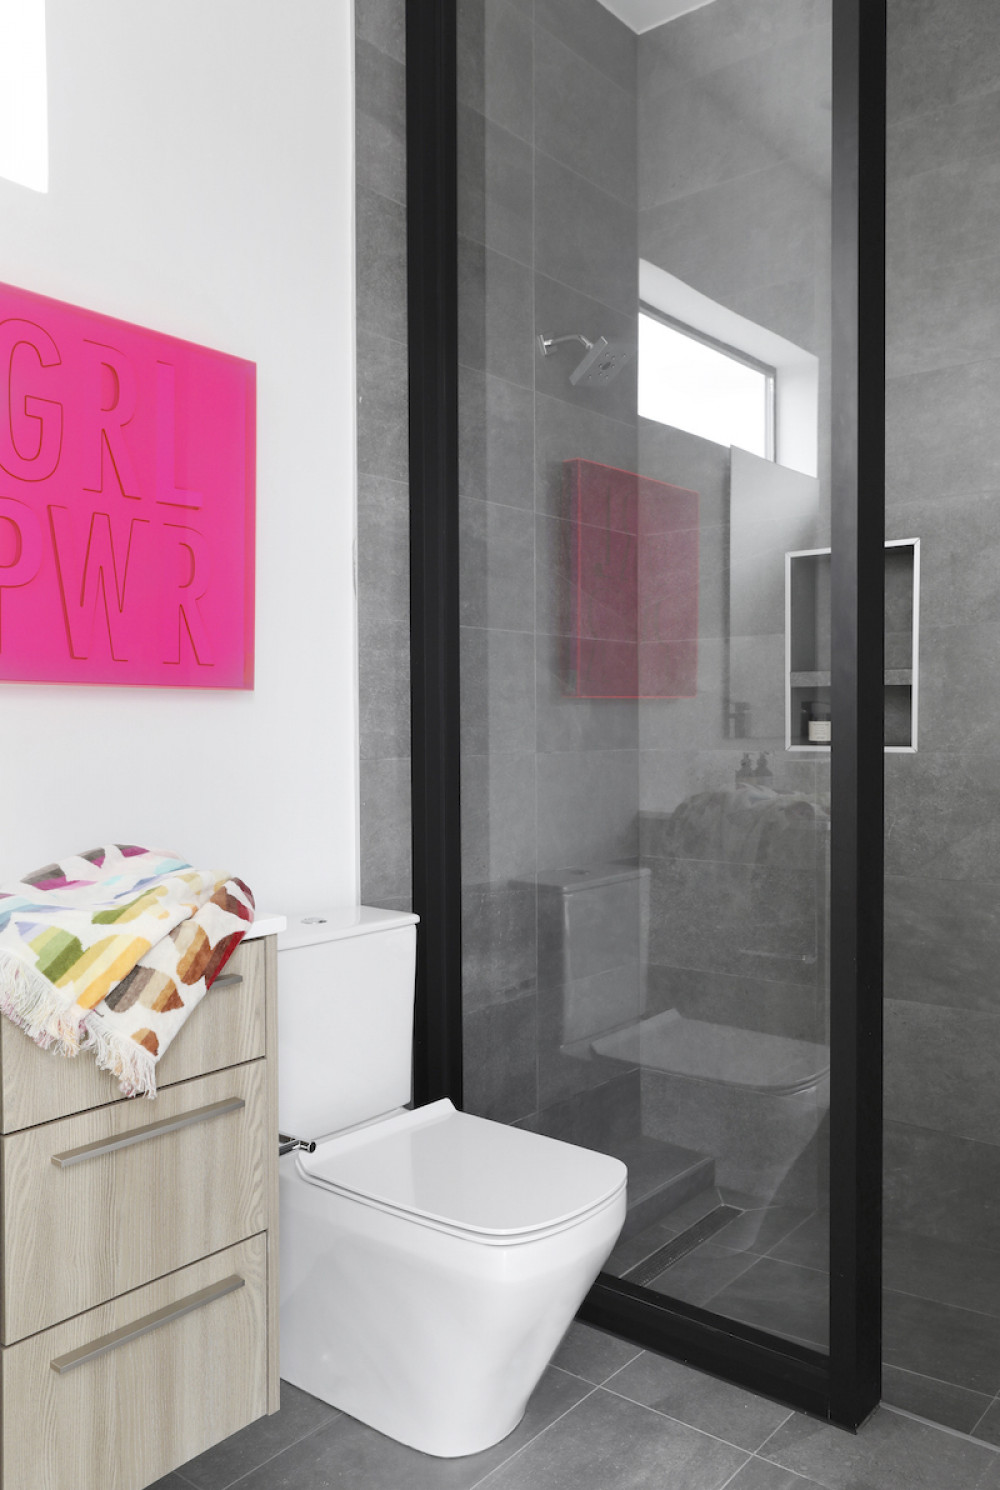 bathroom-interior-design-girl-power-wall-art